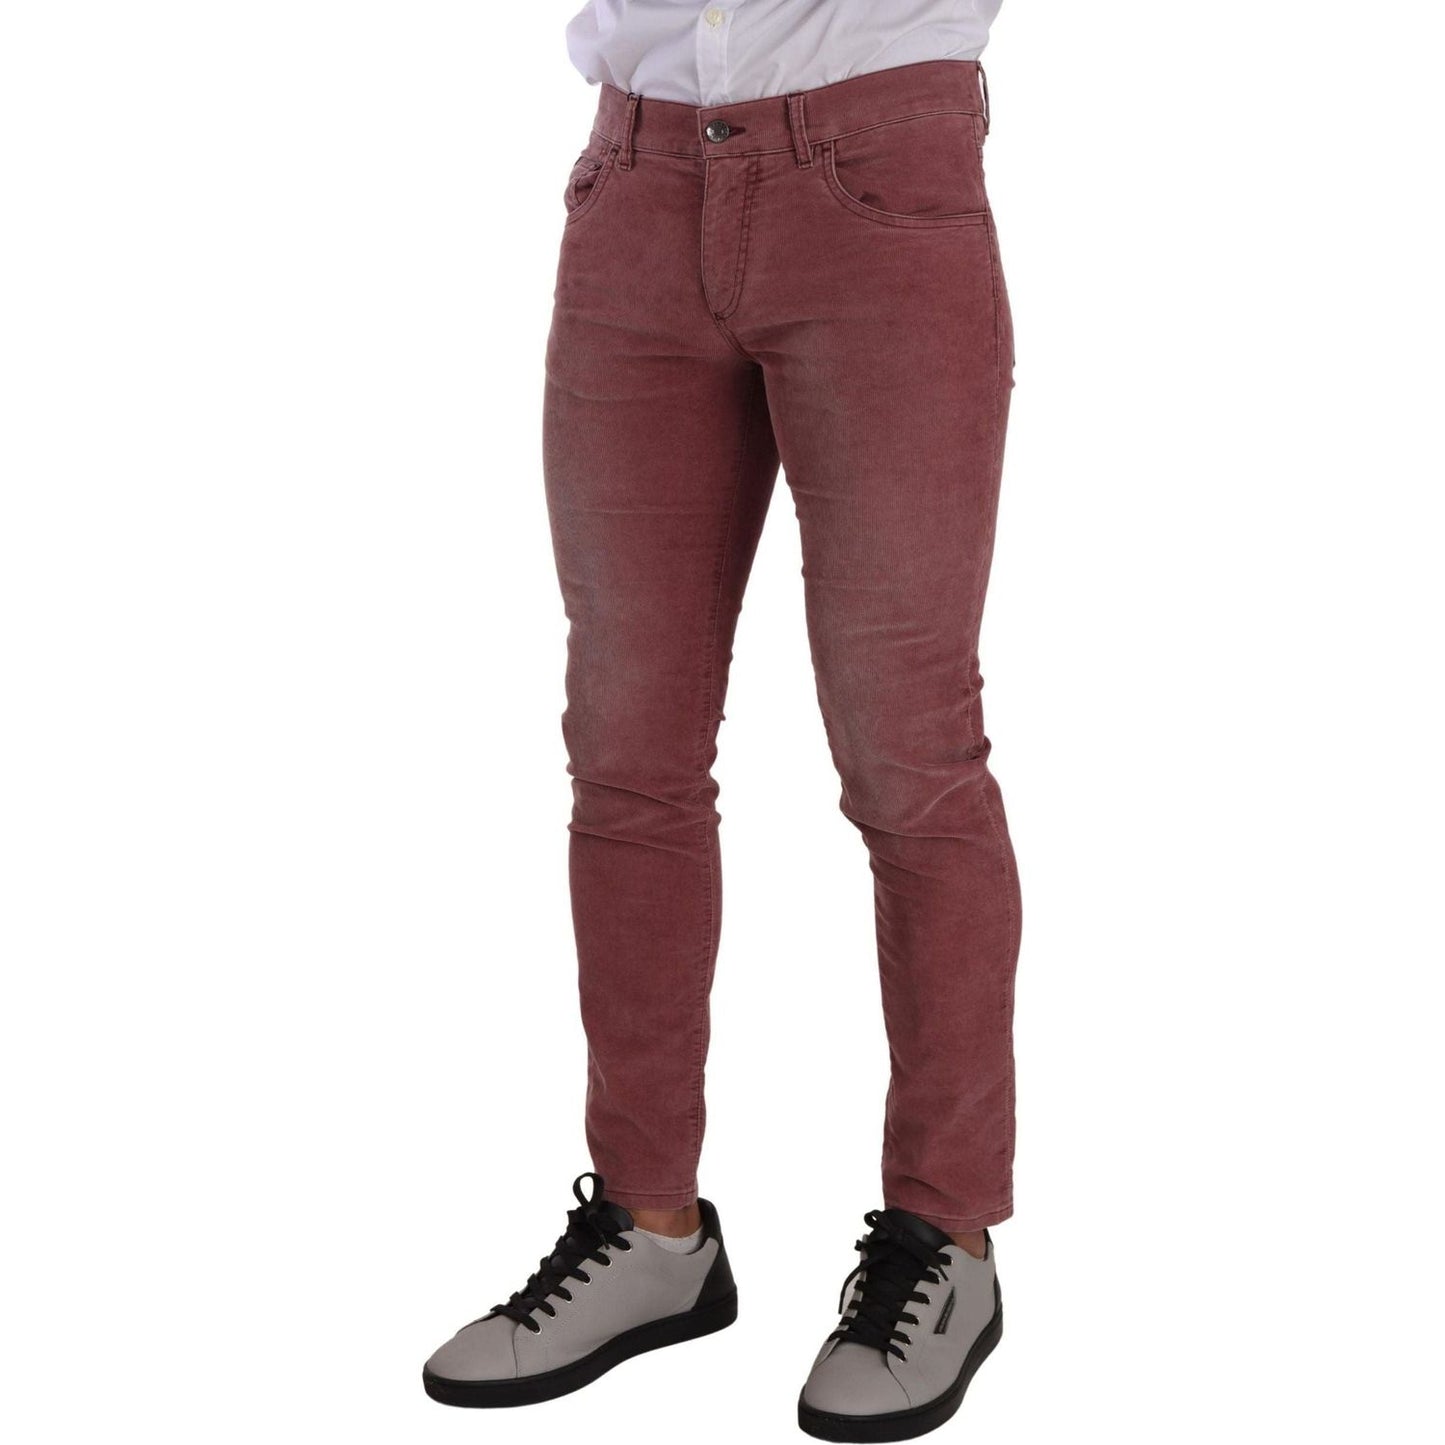 Dolce & Gabbana Elegant Slim Fit Corduroy Jeans pink-corduroy-cotton-skinny-men-denim-jeans IMG_1590-scaled-17a43e1a-169.jpg